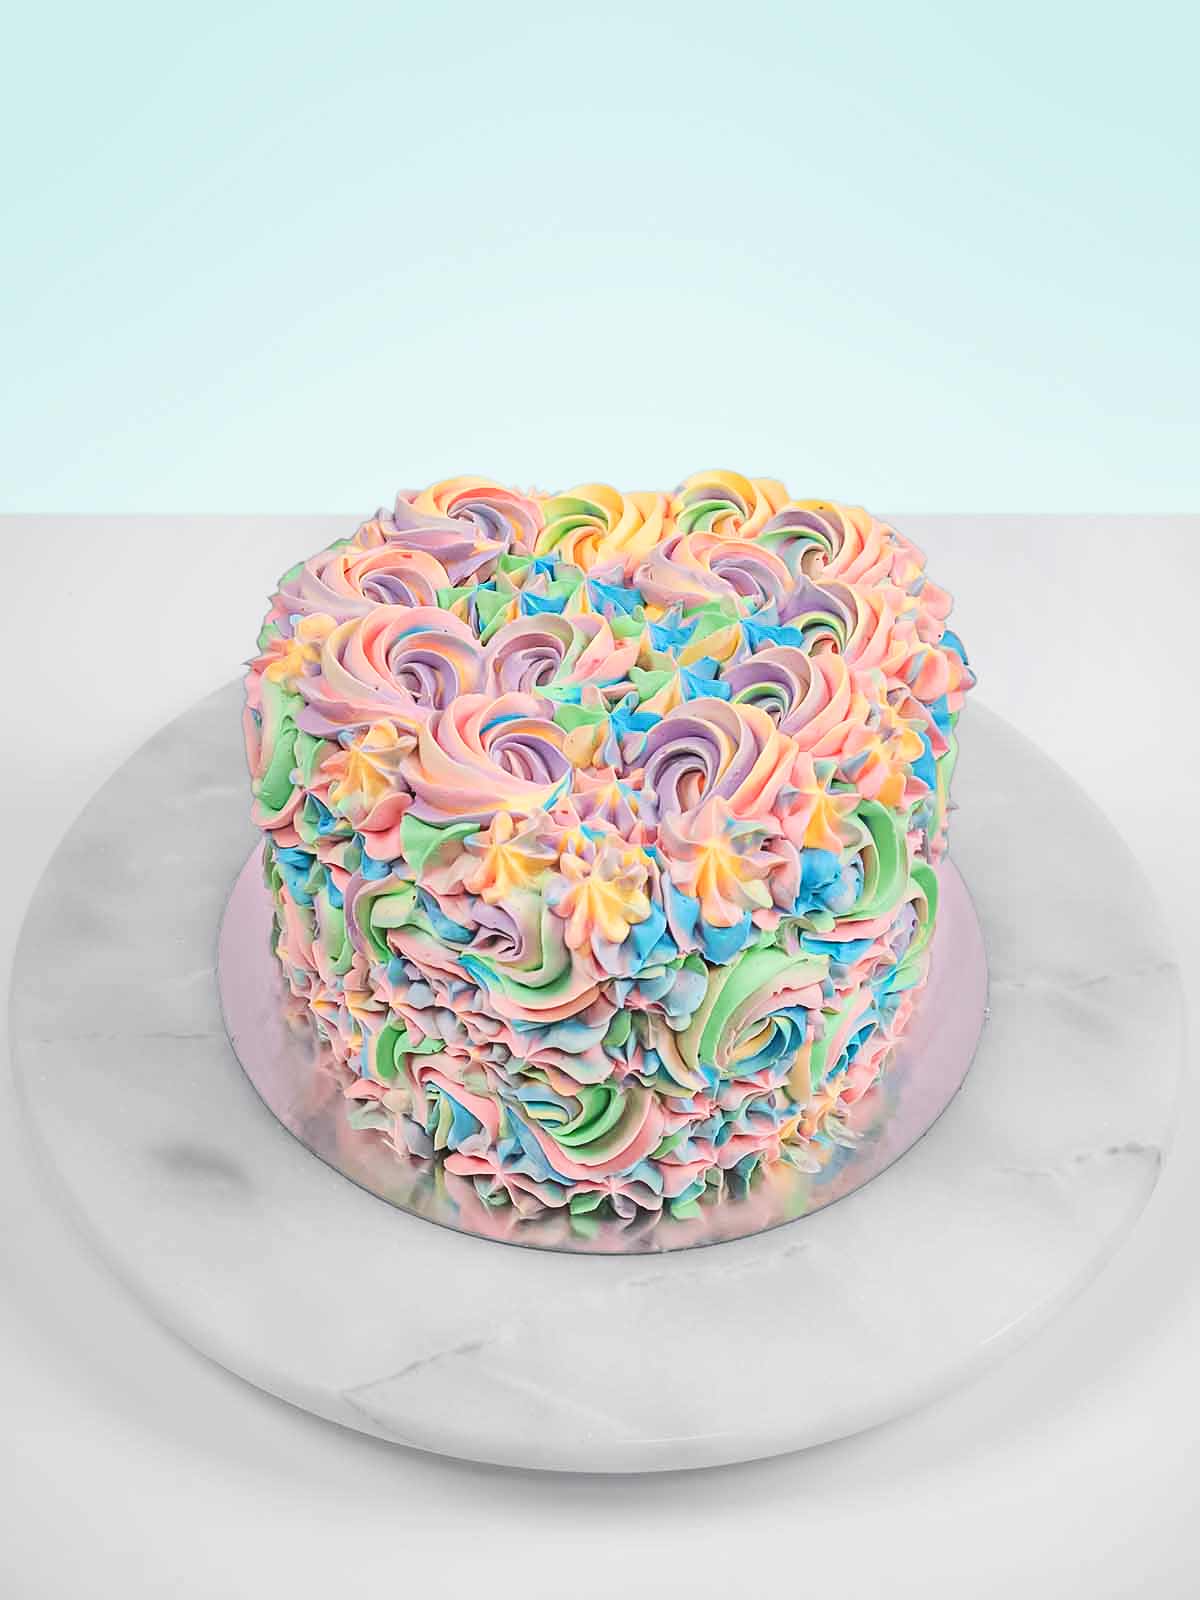 Pastel Rainbow Cake With Macarons